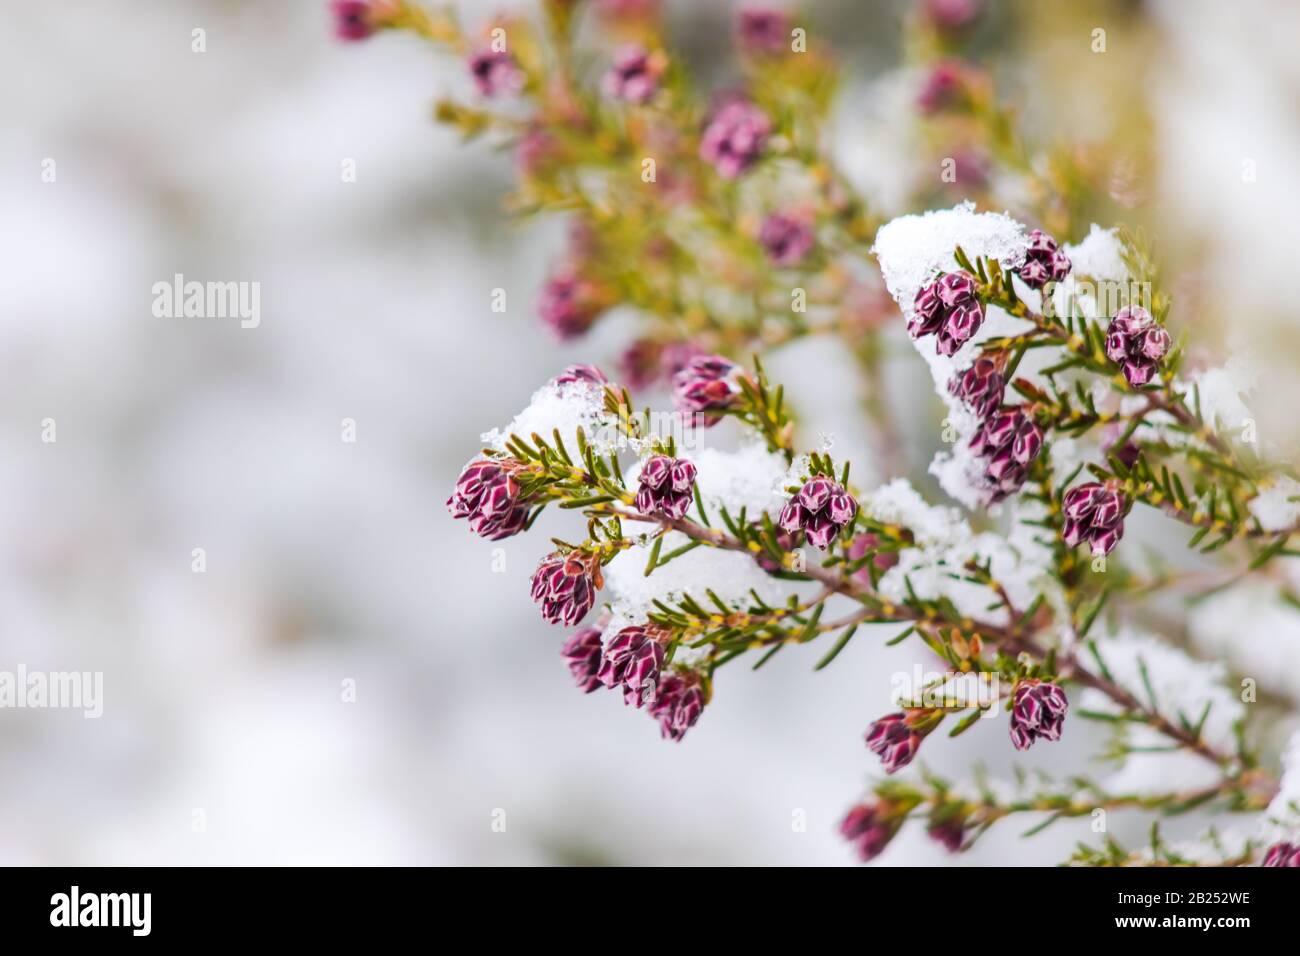 Heather (Erica australis) in bloom covered by snow at winter in Serra da Estrela (Portugal) Stock Photo